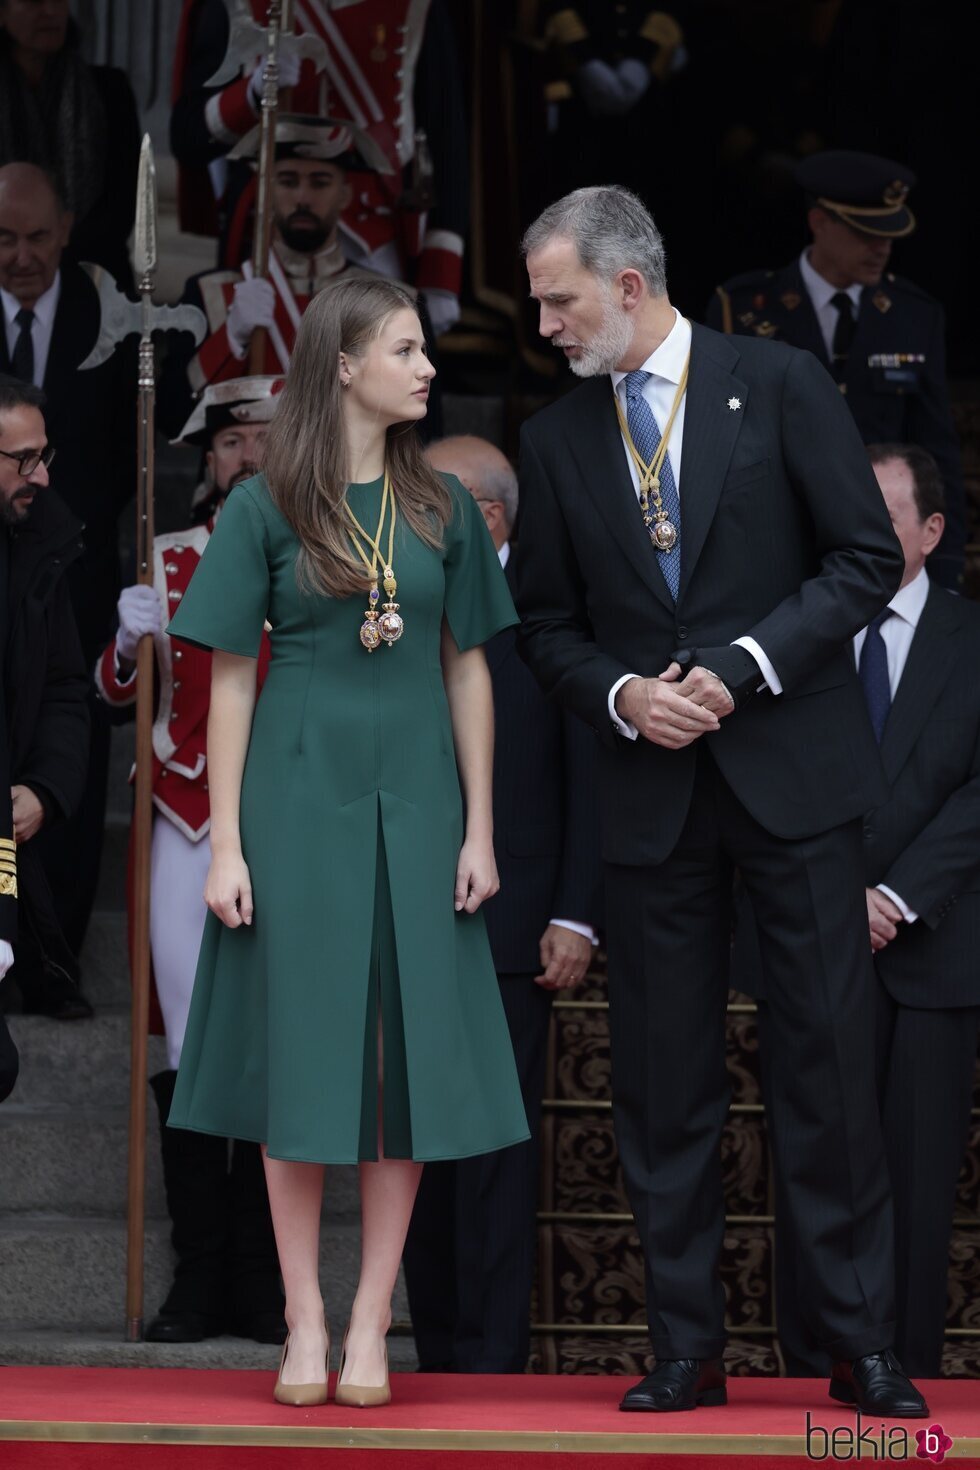 El Rey Felipe y la Princesa Leonor hablando en la Apertura de la XV Legislatura